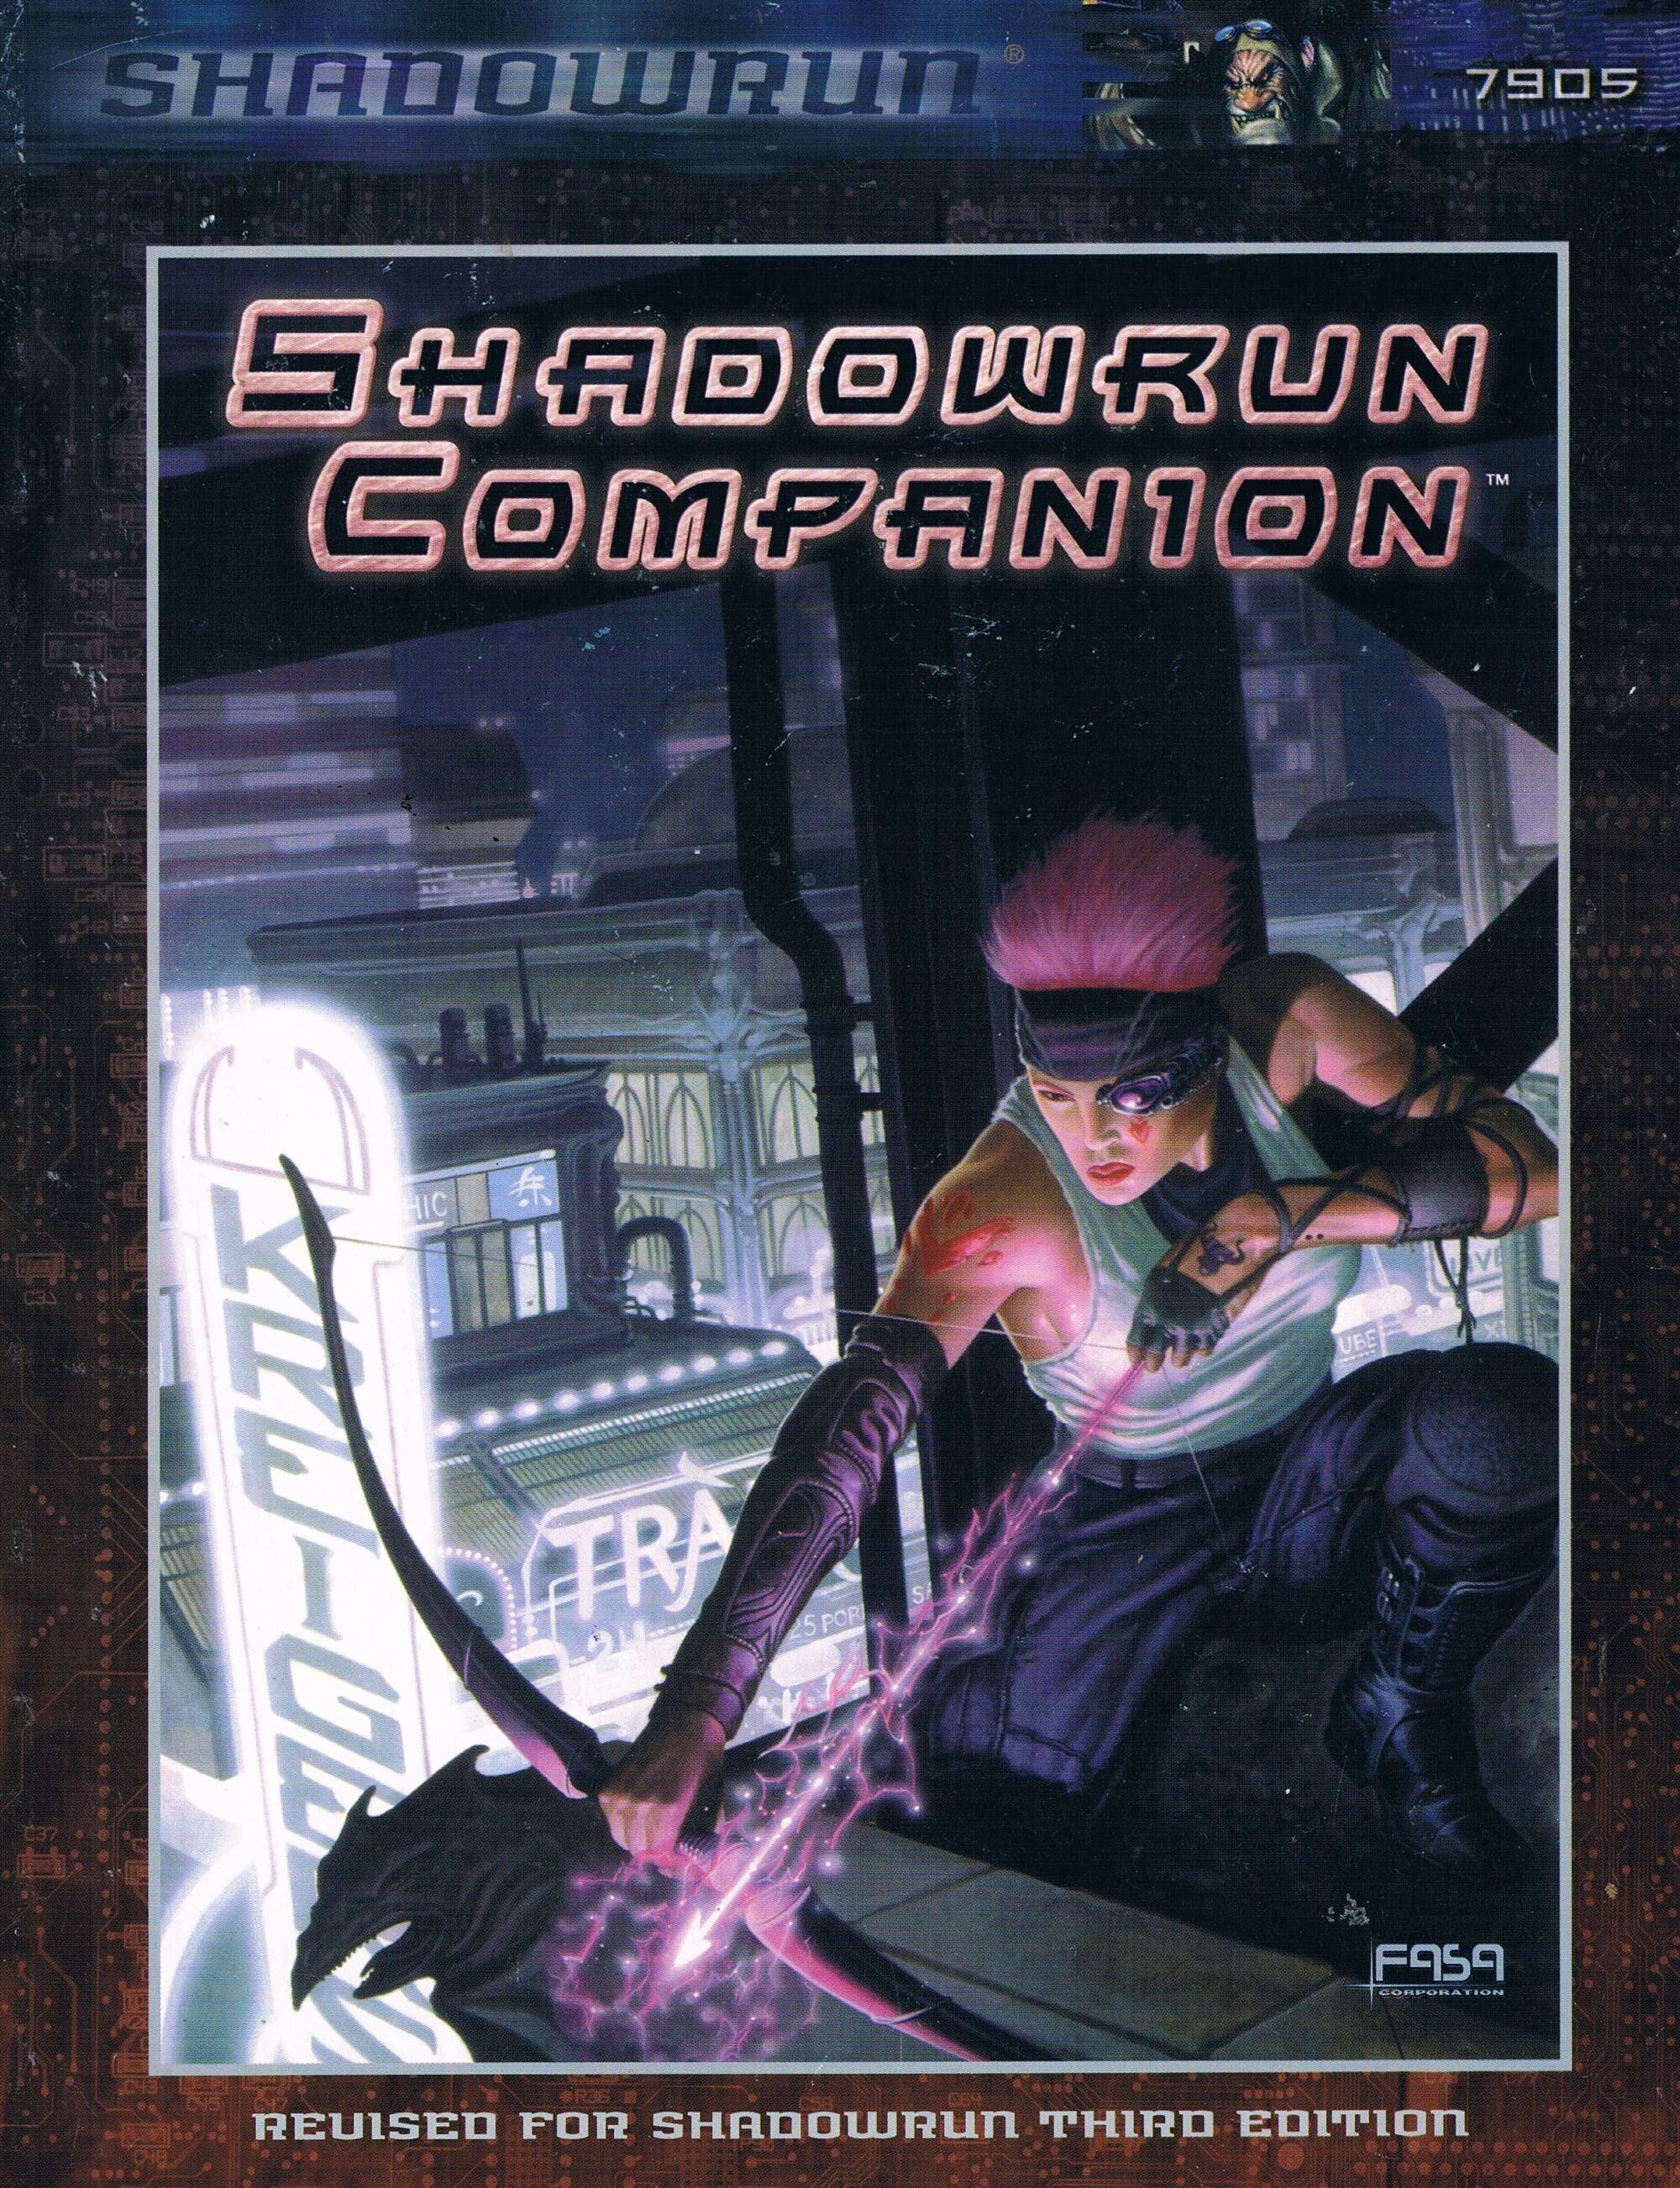 Review – Shadowrun: Sixth World Companion